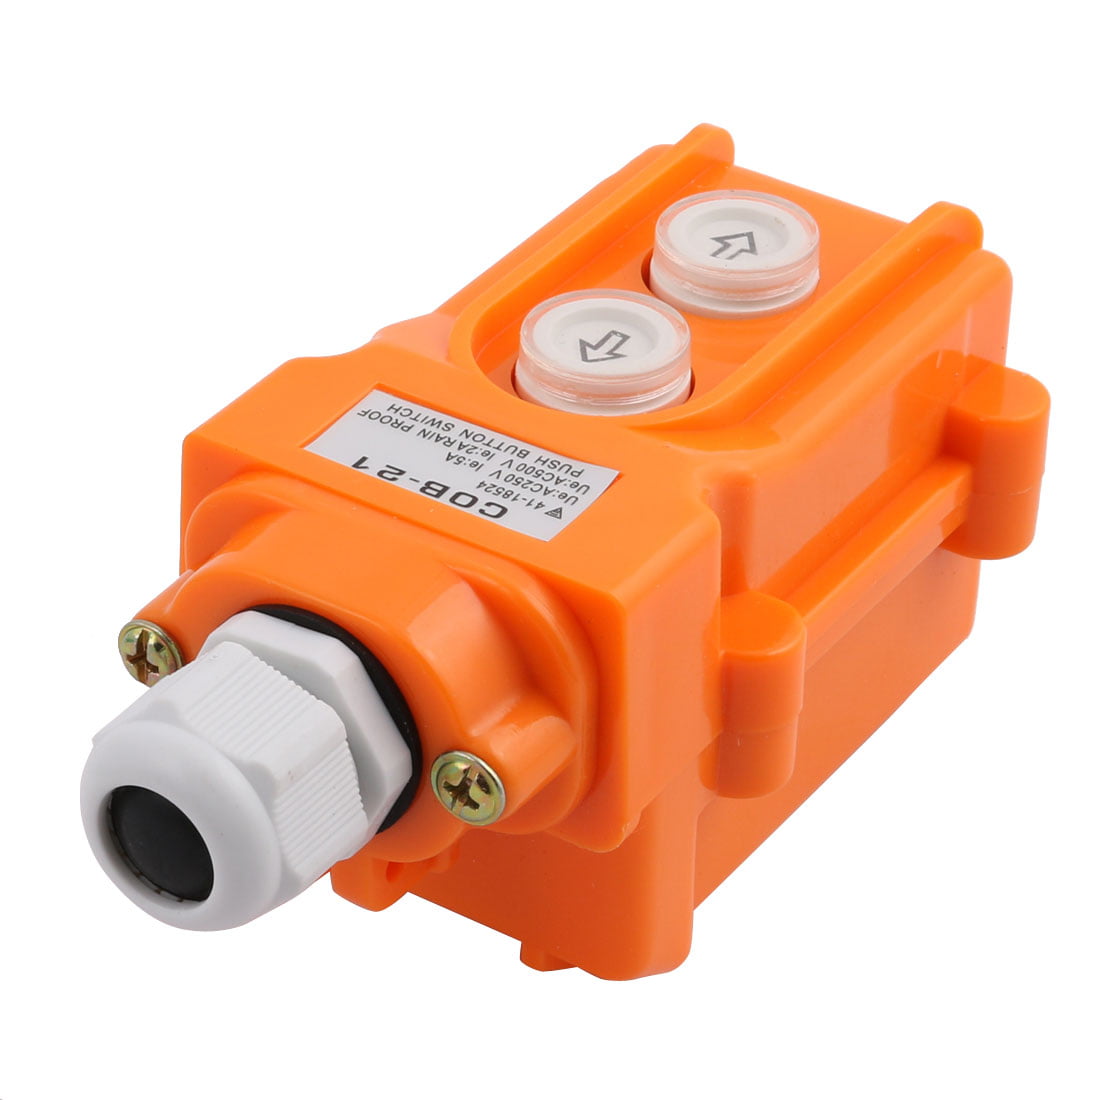 250V 5A /500V 2A 2 Ways Hoist Crane Push Button Switch Momentary Contact Type Rain-proof Orange 